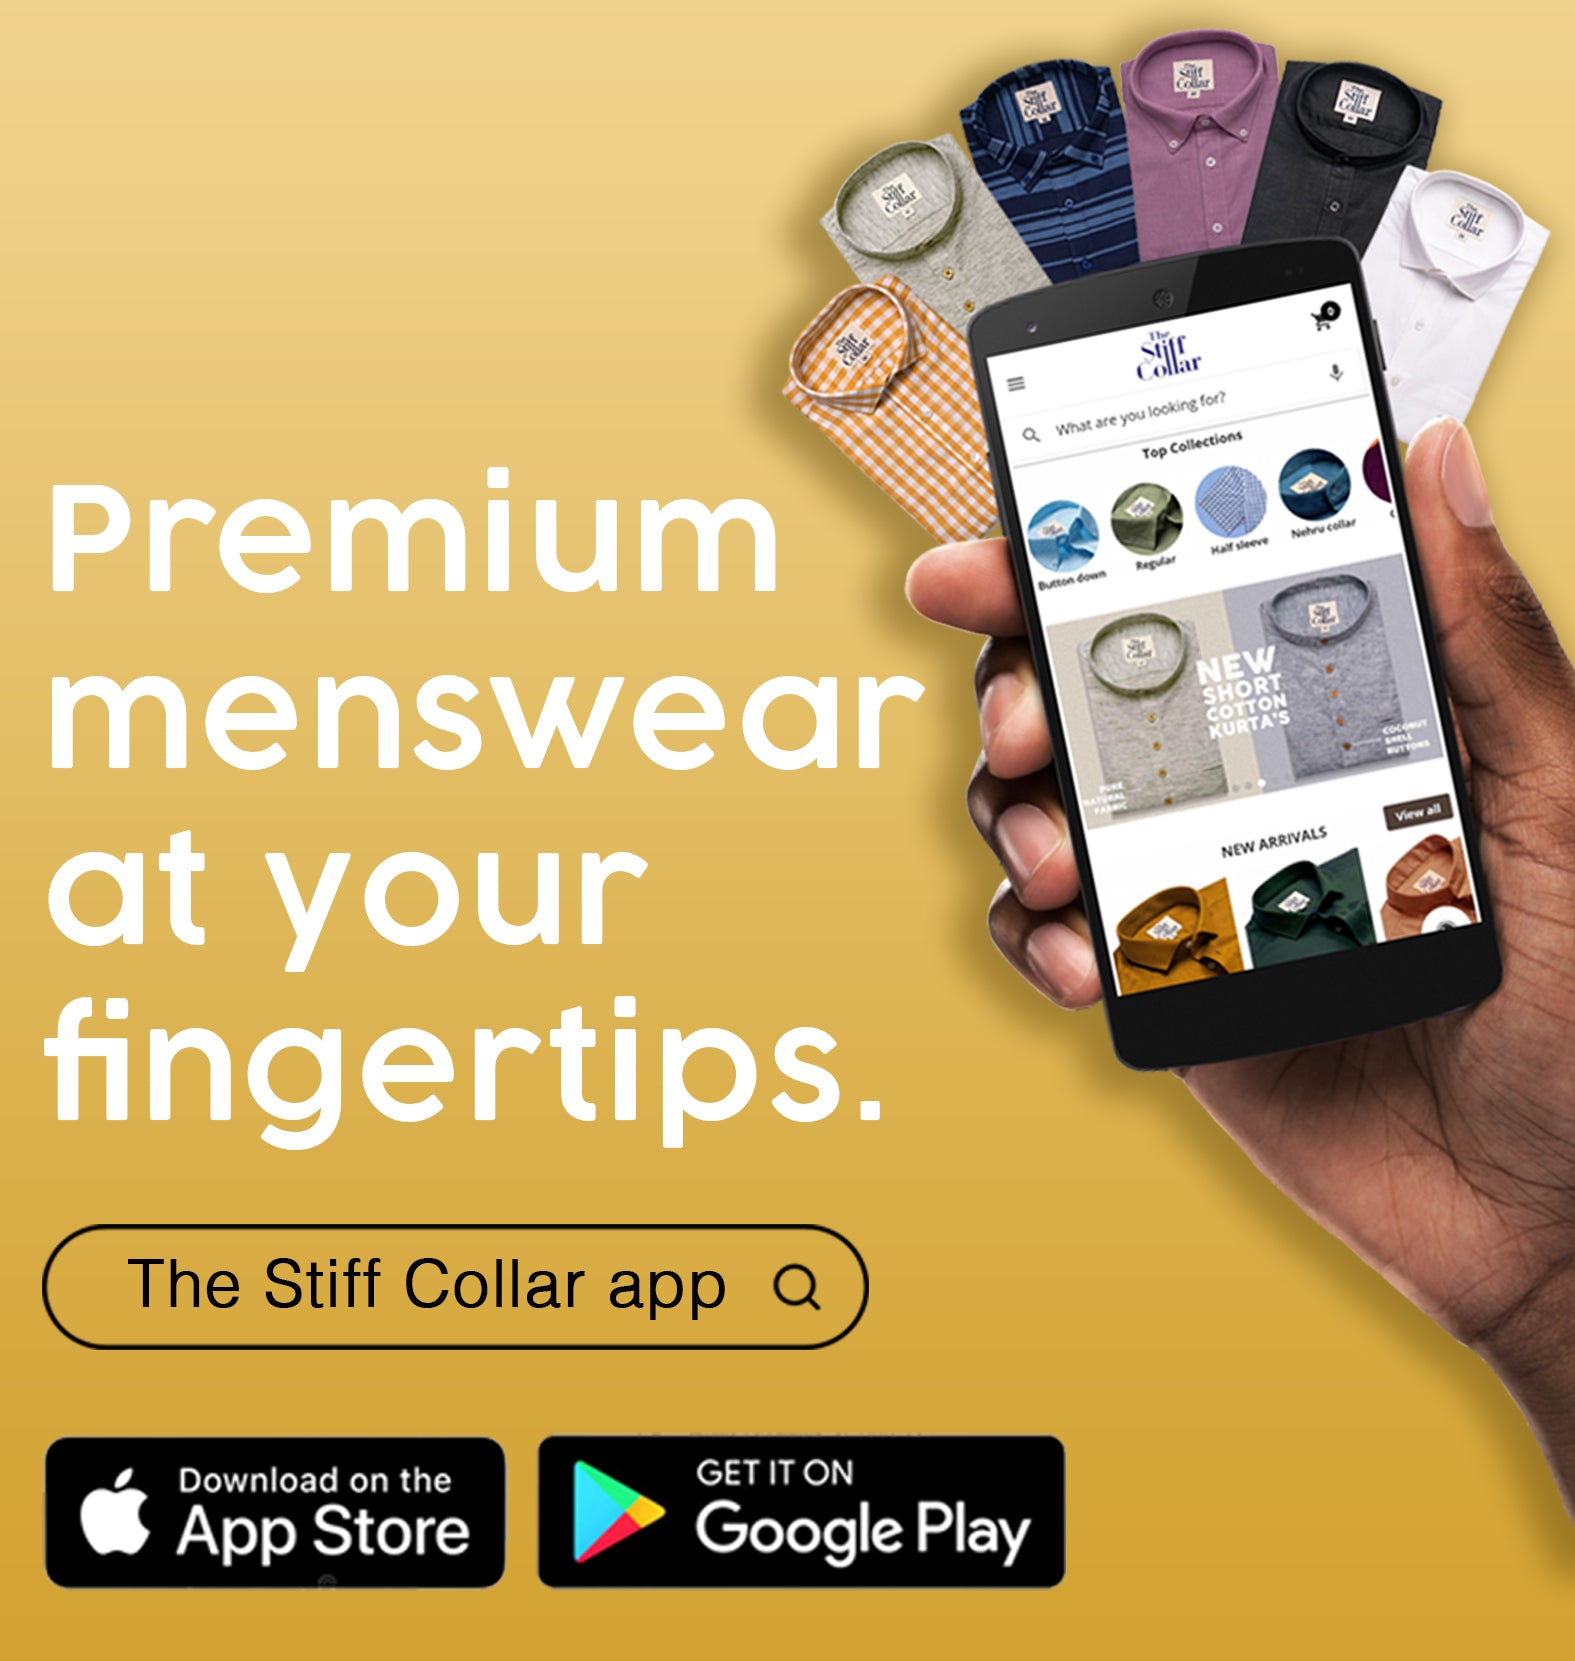 *NEW* The Stiff Collar App!